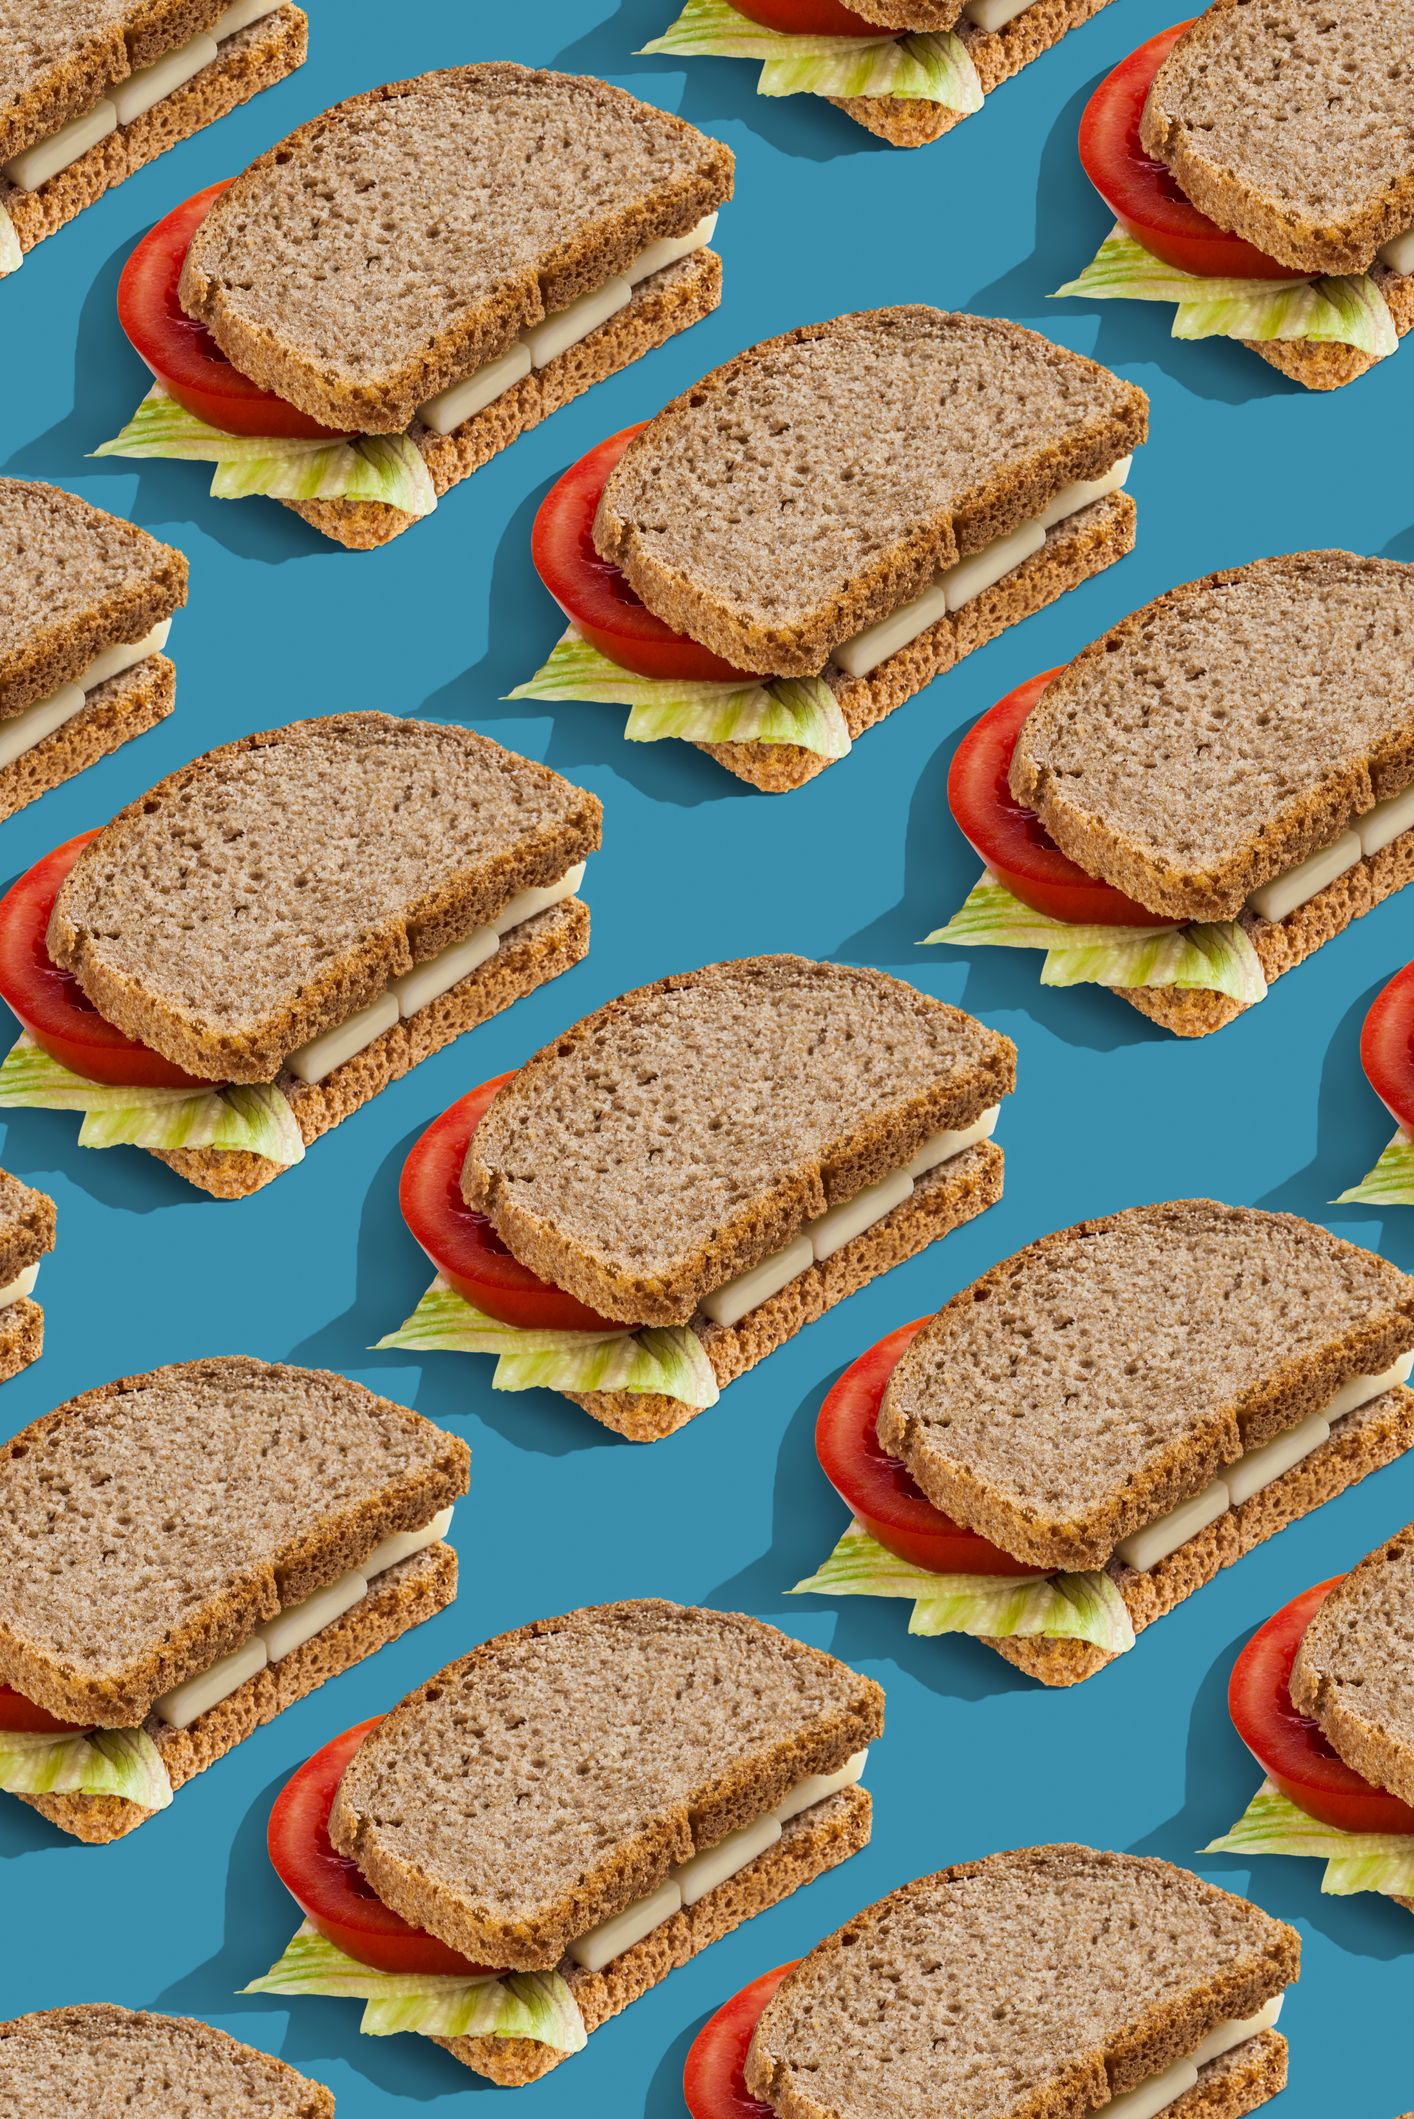 look sharp and enjoy every sandwich.